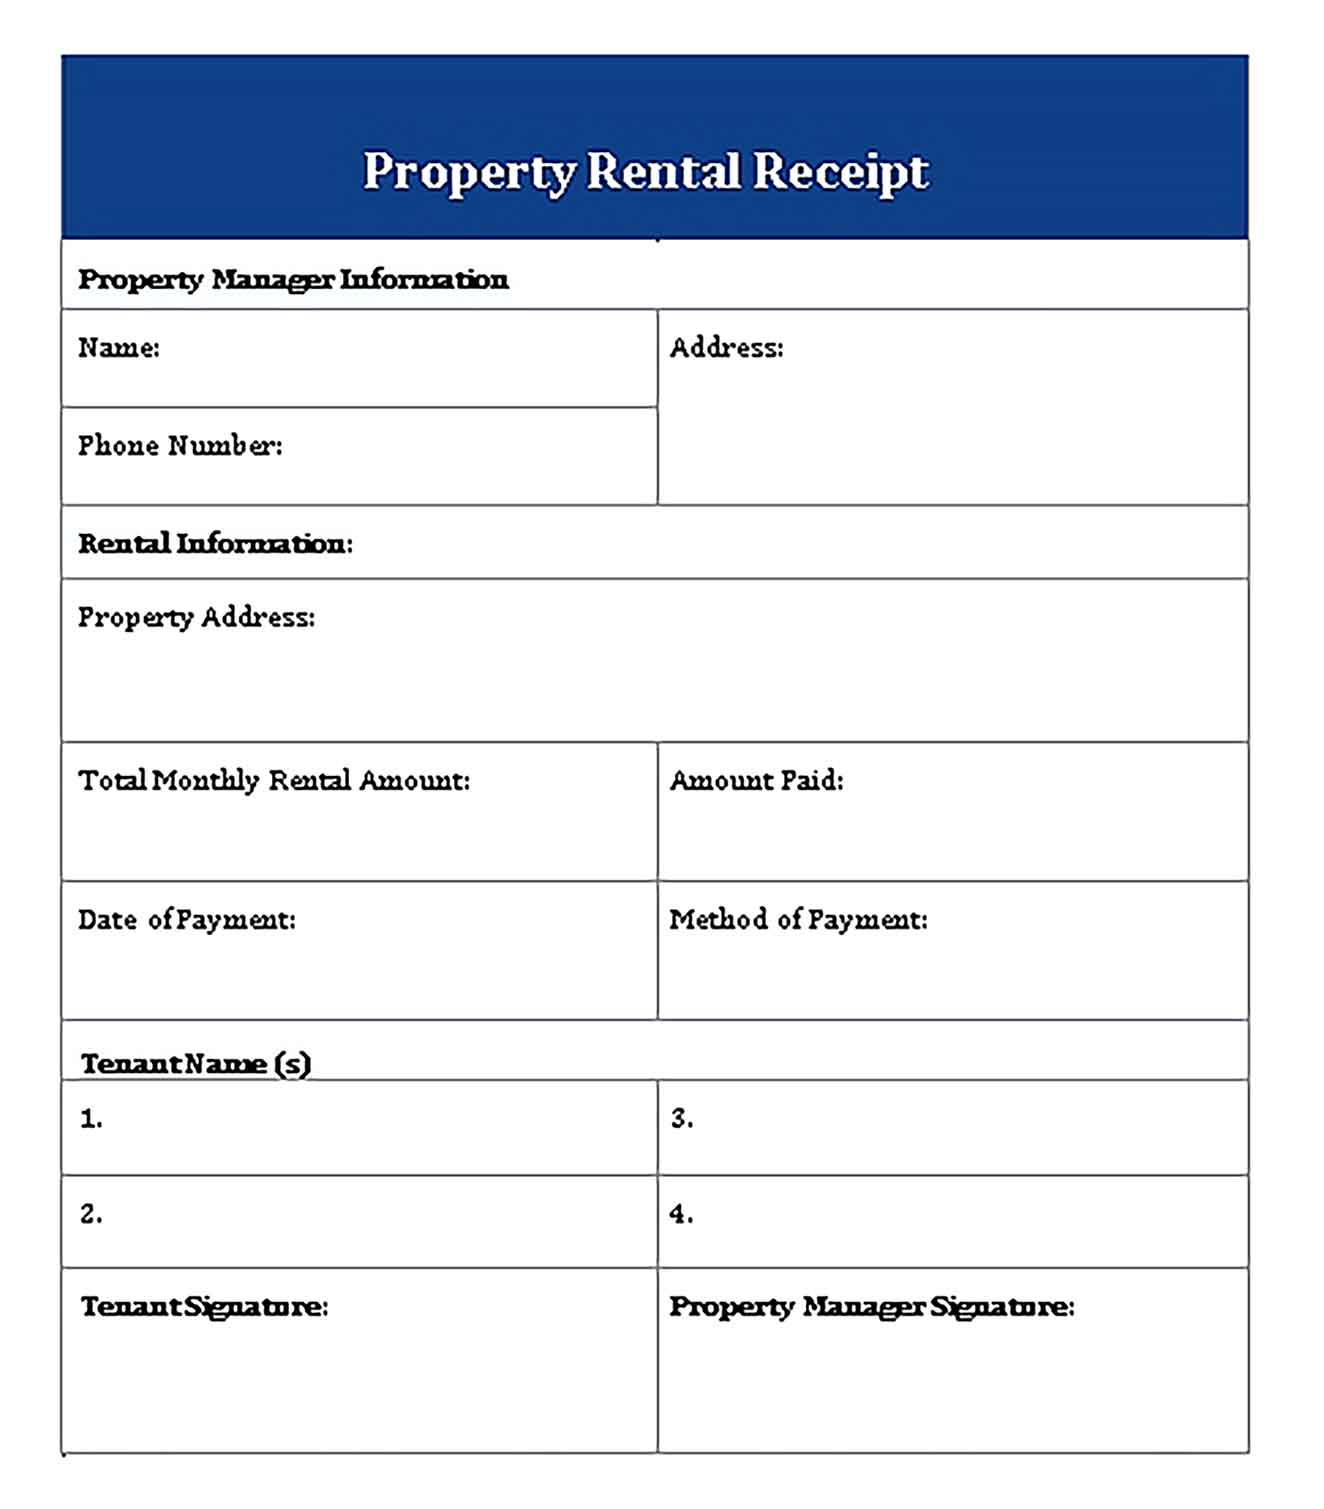 Sample Property Rental Receipt Templates 3